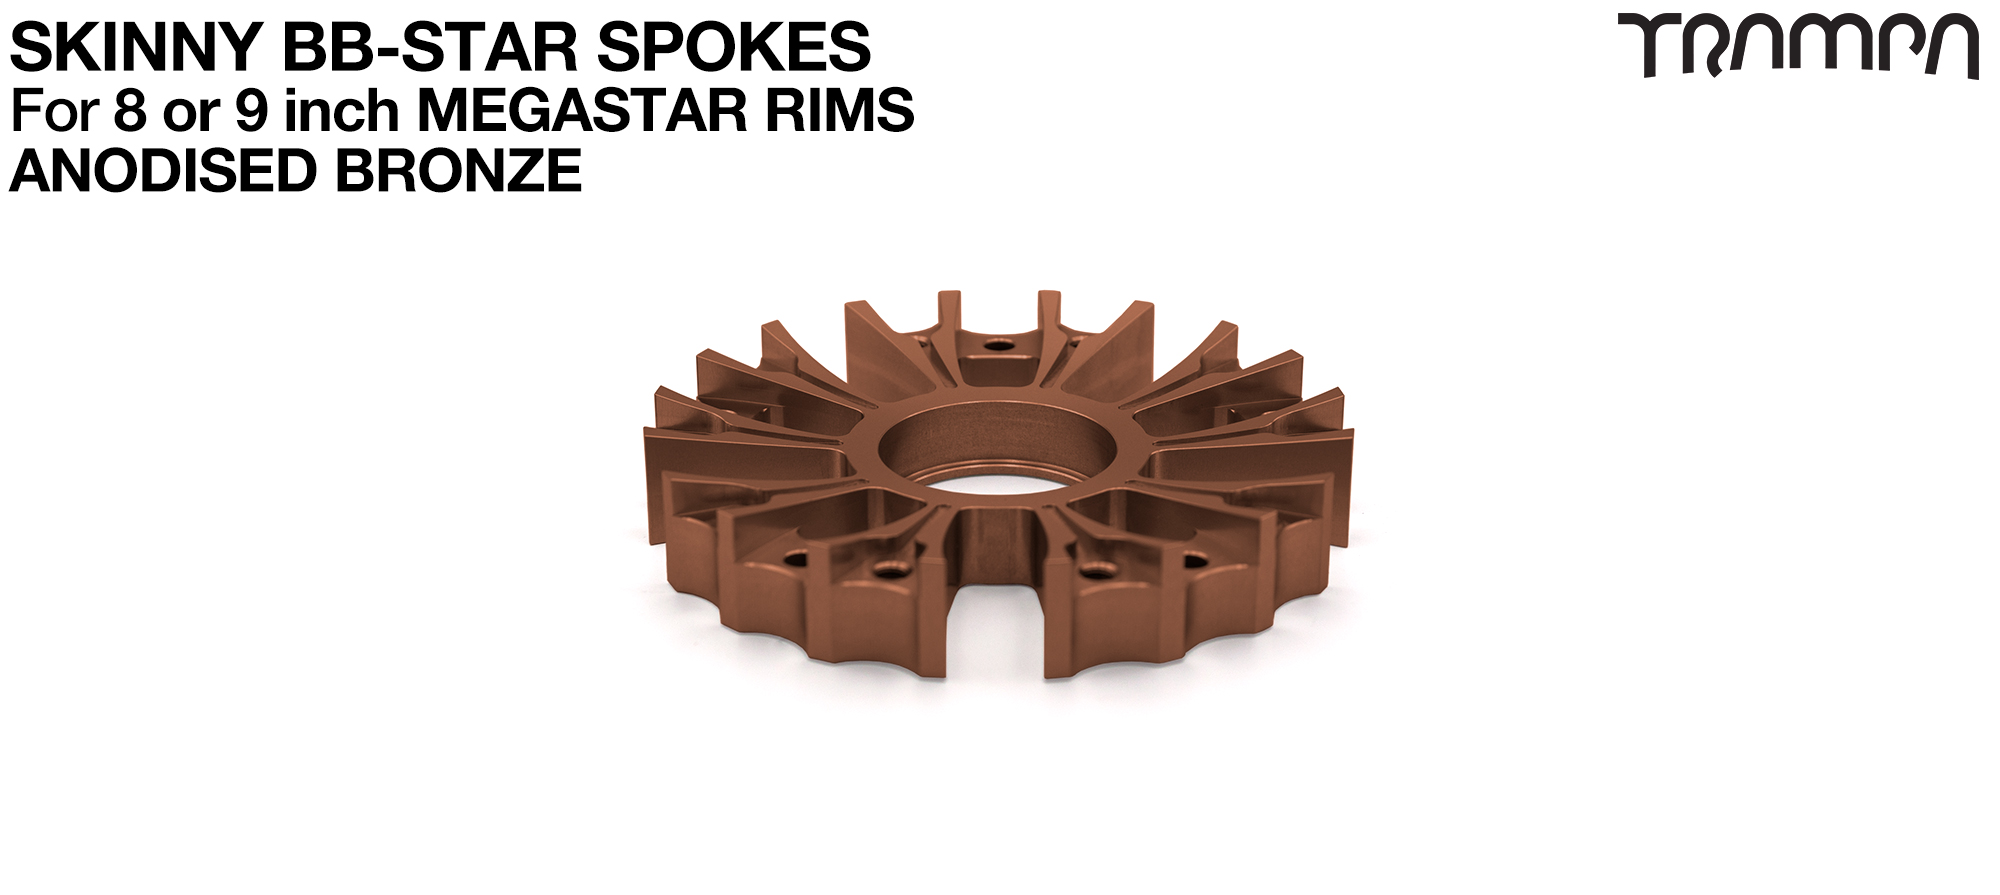 BBStar SKINNY Spoke for MEGASTAR 8 & 9 Rims - Extruded T6 Heat Treated & CNC Precision milled - BRONZE